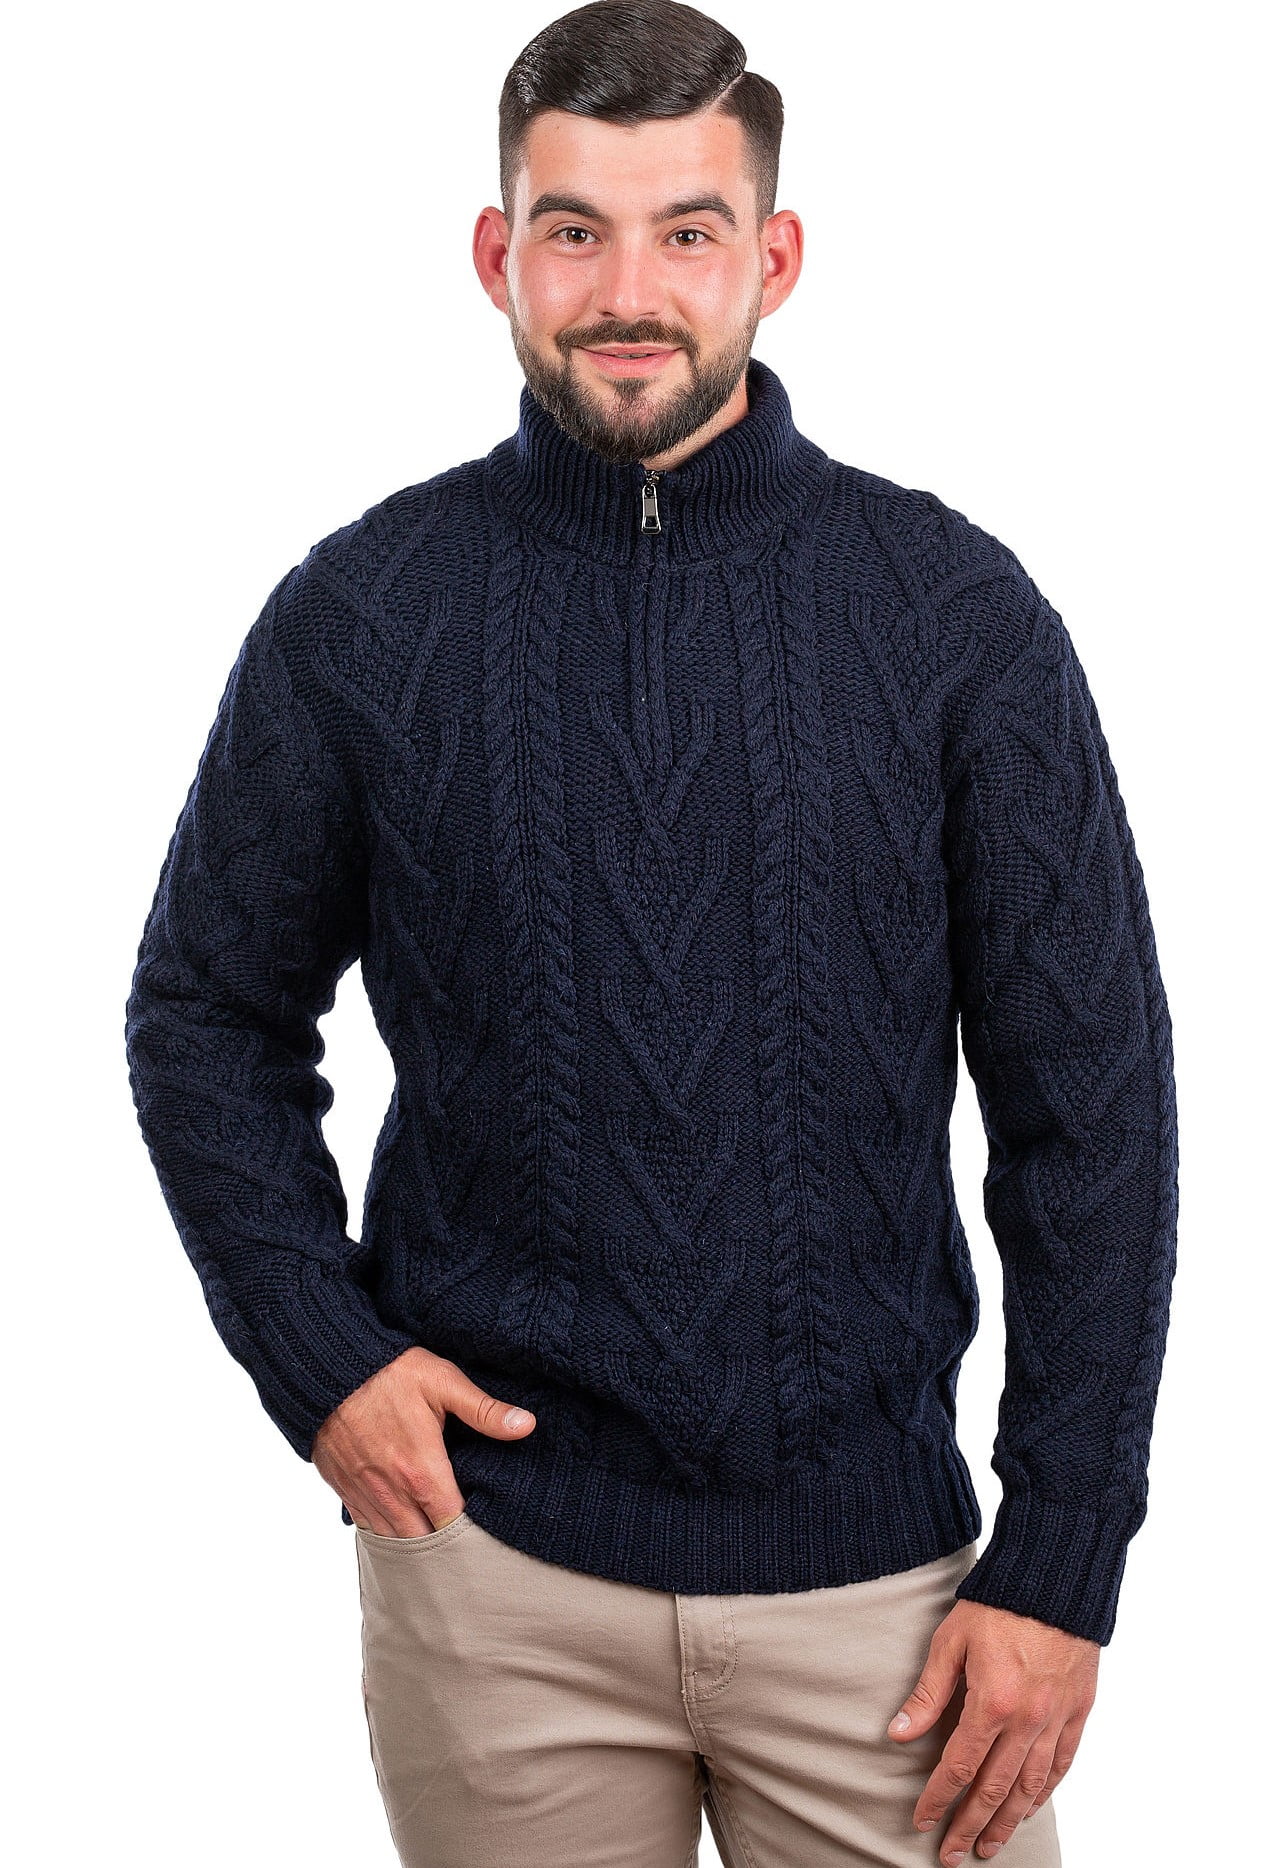 SAOL Aran 100% Merino Wool Men's Zip Neck Fisherman Sweater Irish ...